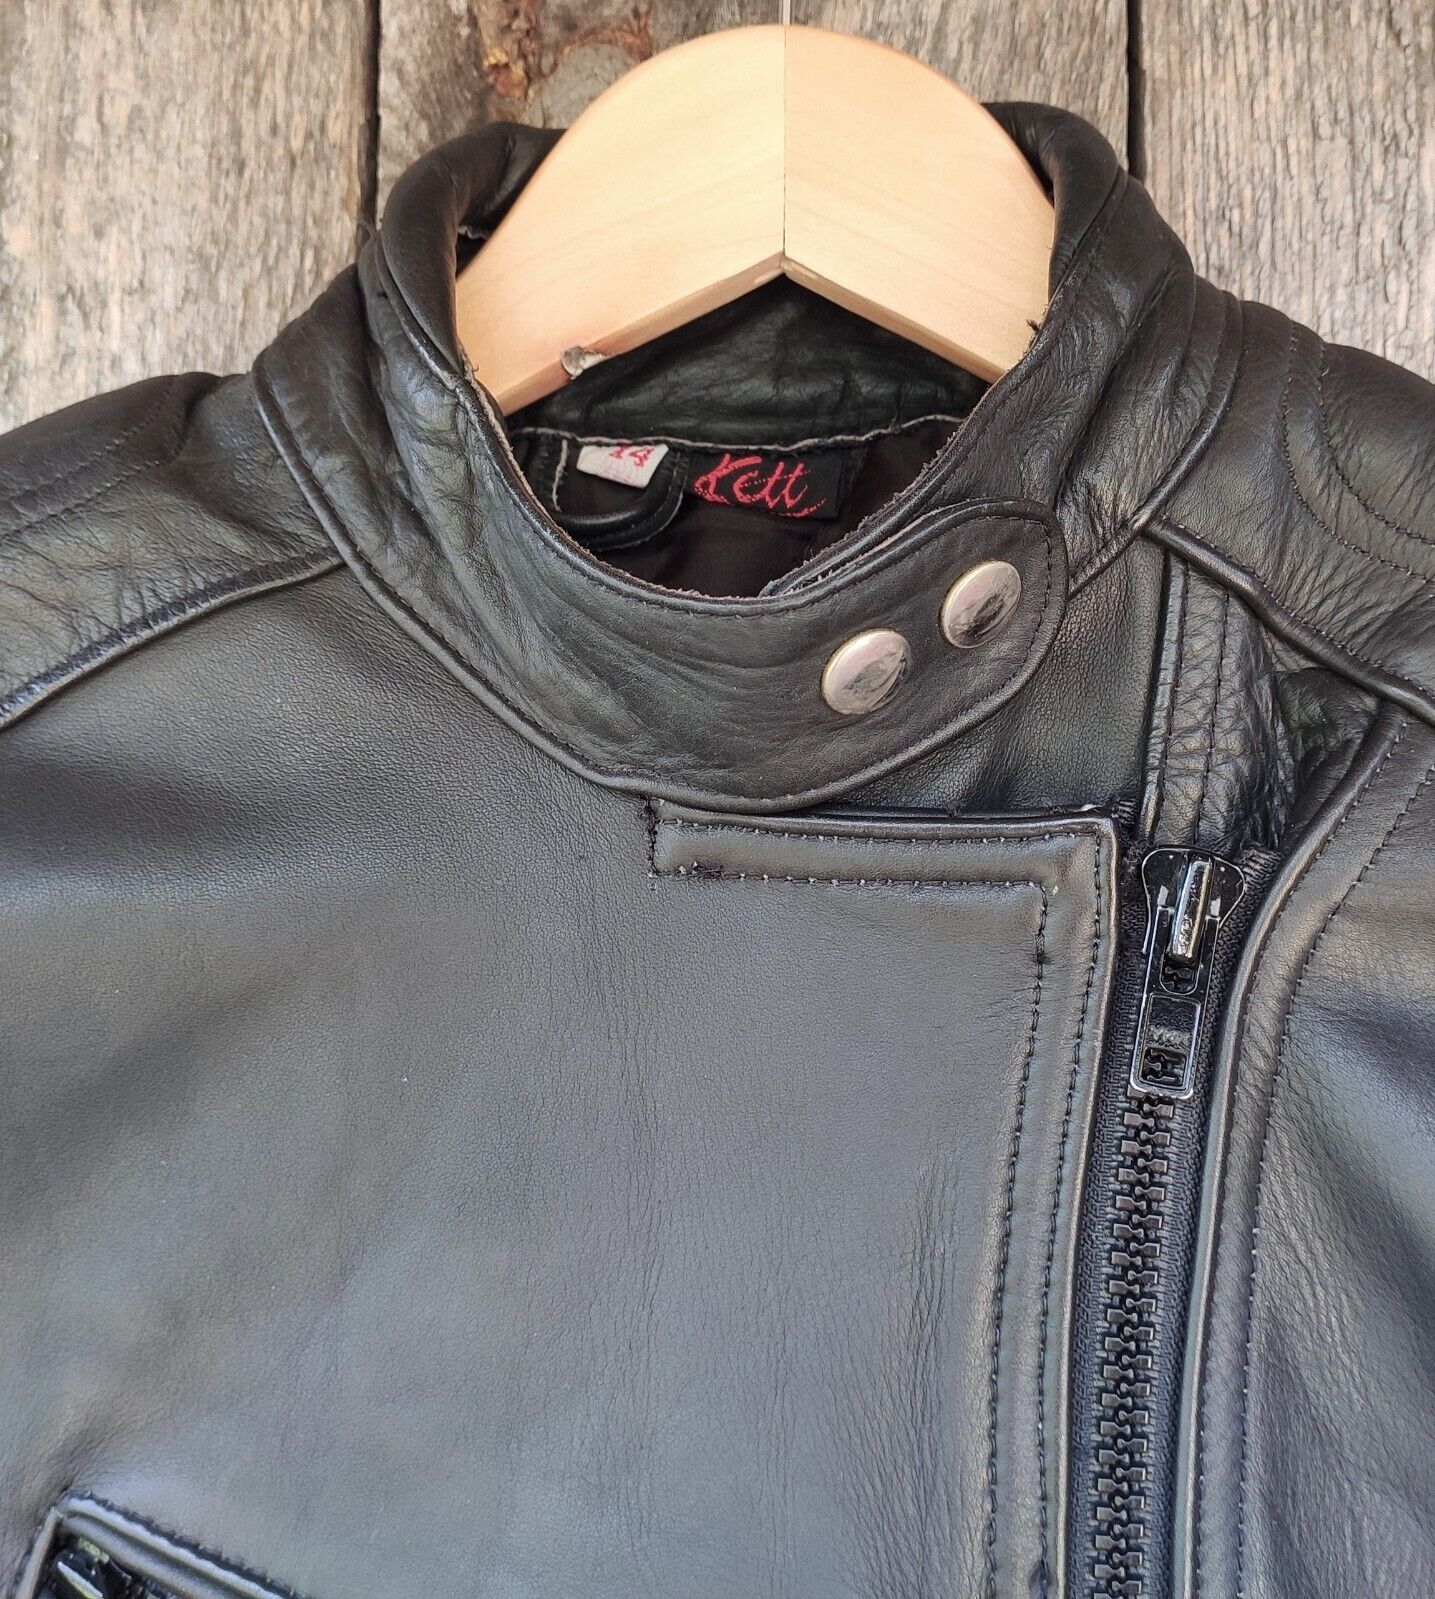 Image of Vtg Kett Ladies Leathers Cafe Racer Motorcycle Jacket Size 14 Biker/Classic